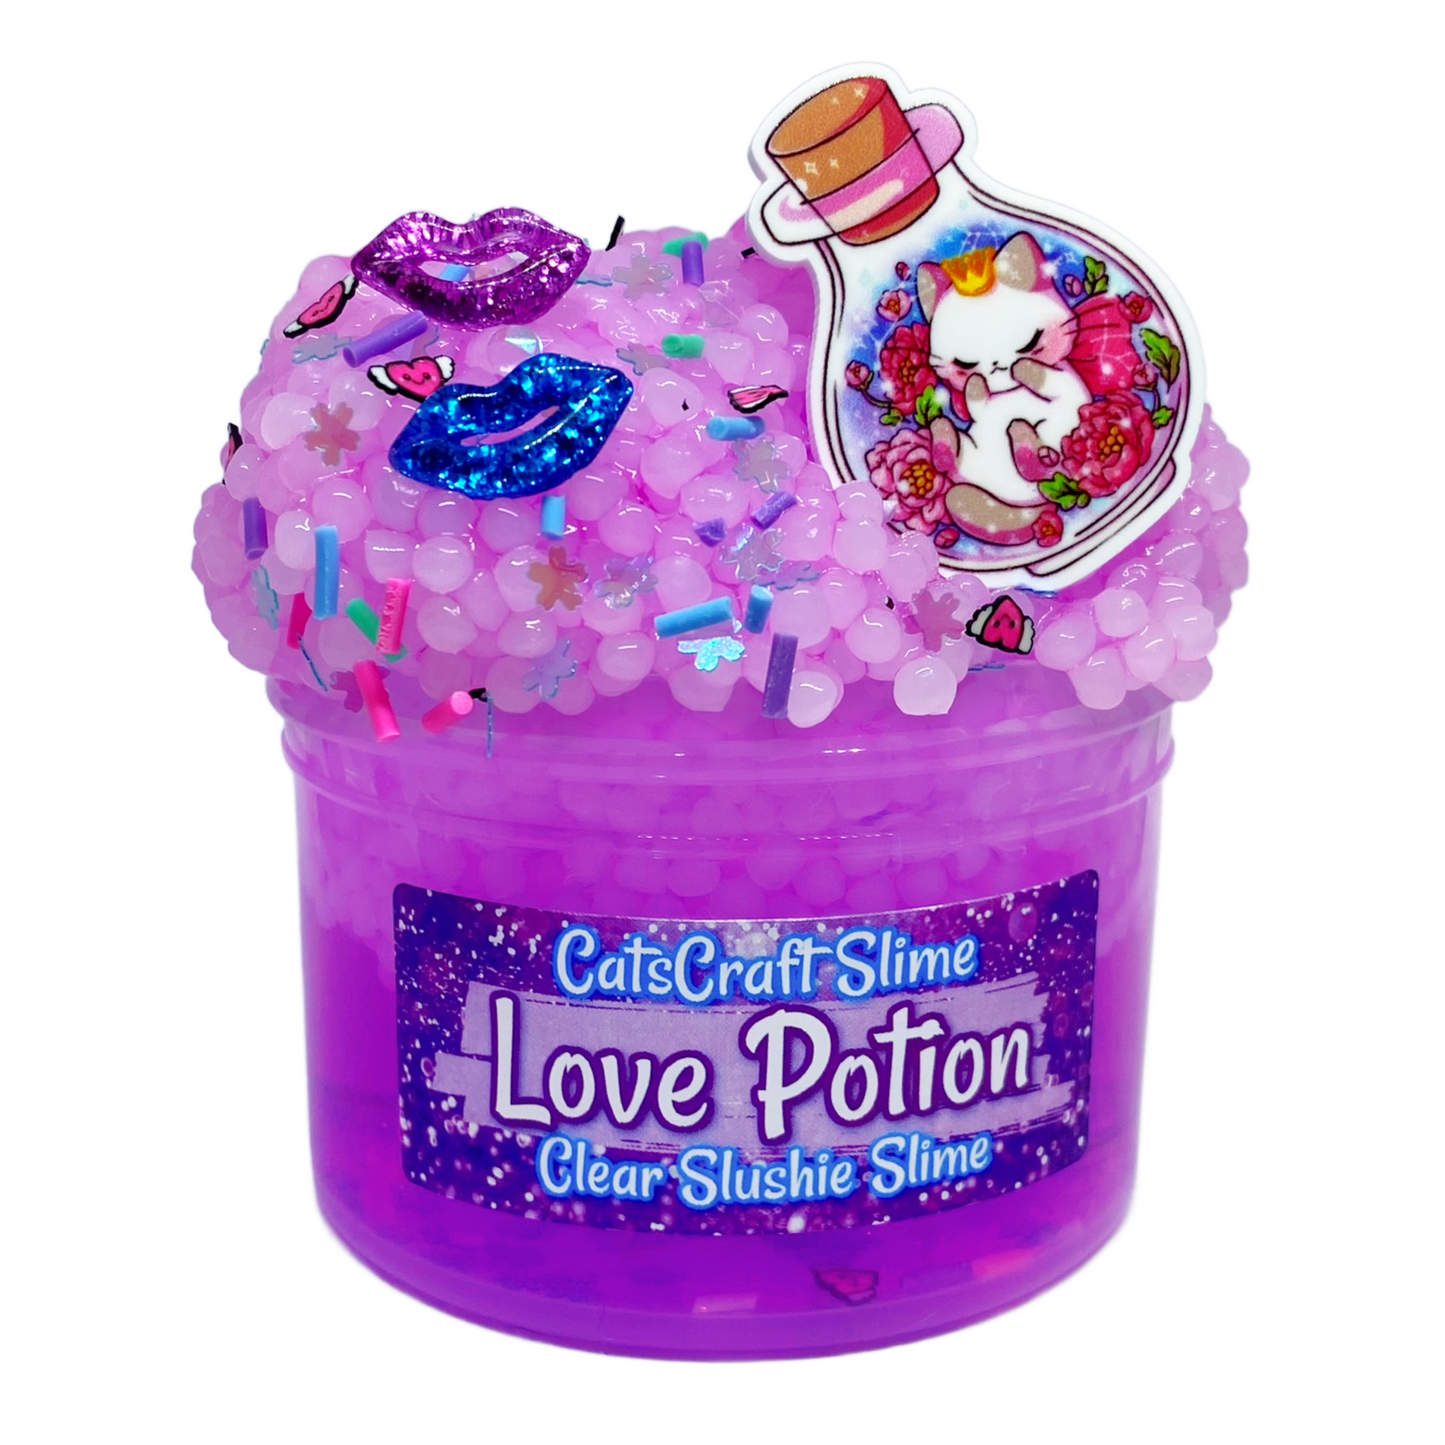 Slushie Slime "Love Potion" SCENTED Clear Slushee Bead Crunchy Charm